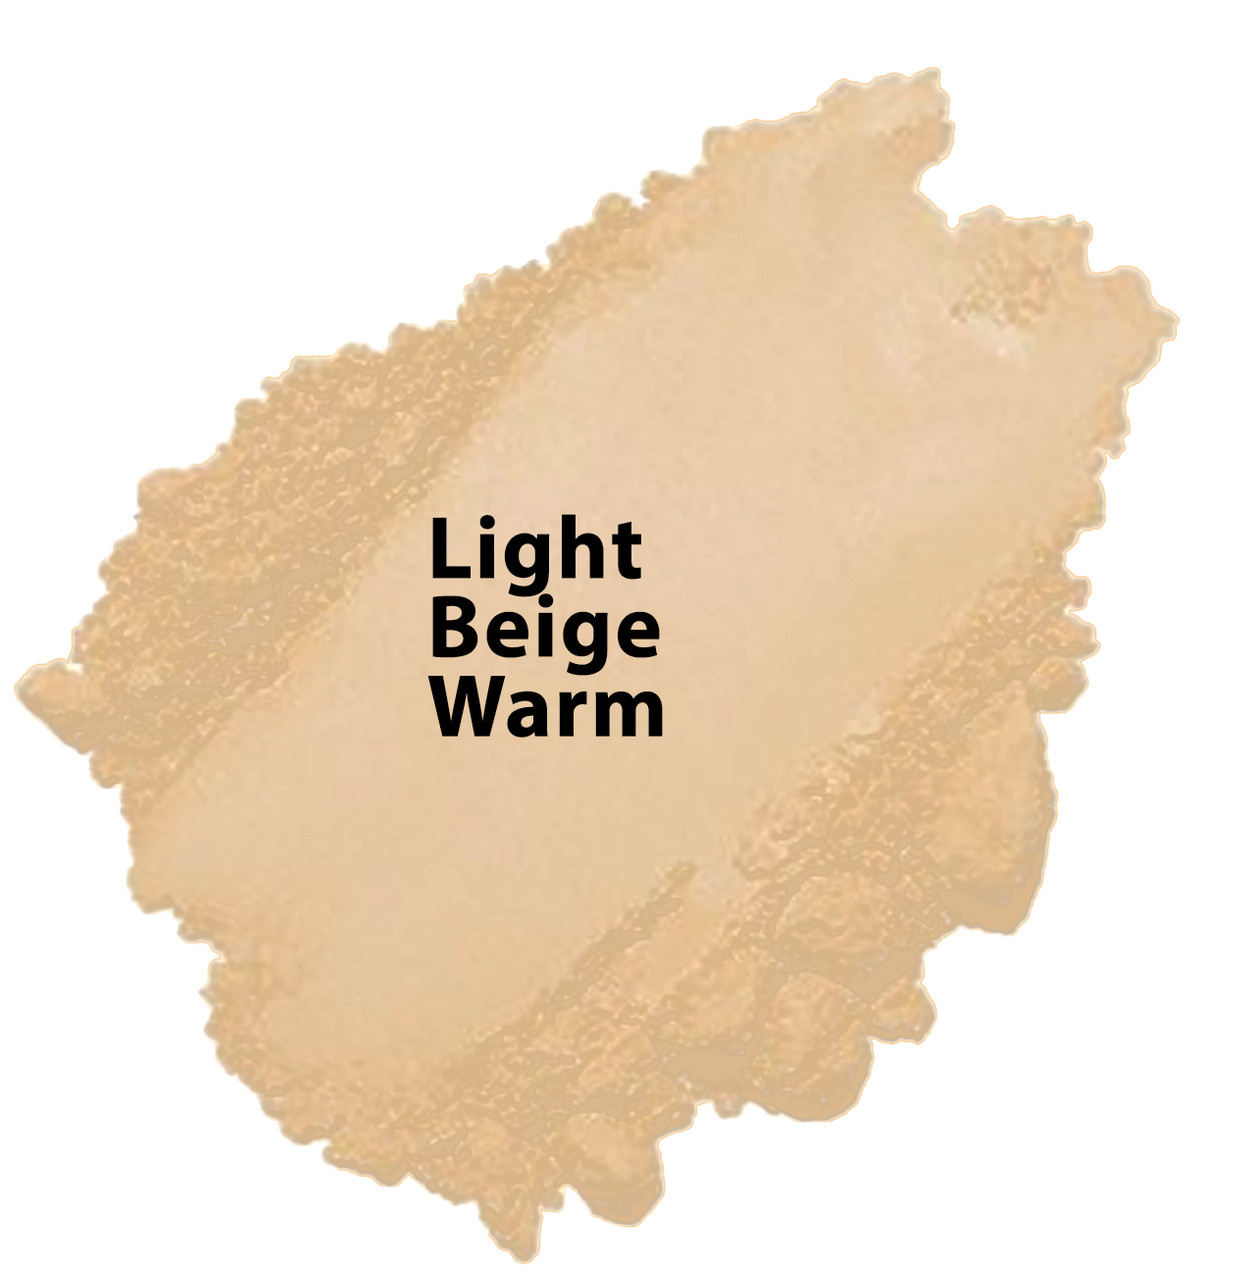 Golden Beige - Light Beige Warm Vegan Mineral Foundation - The All